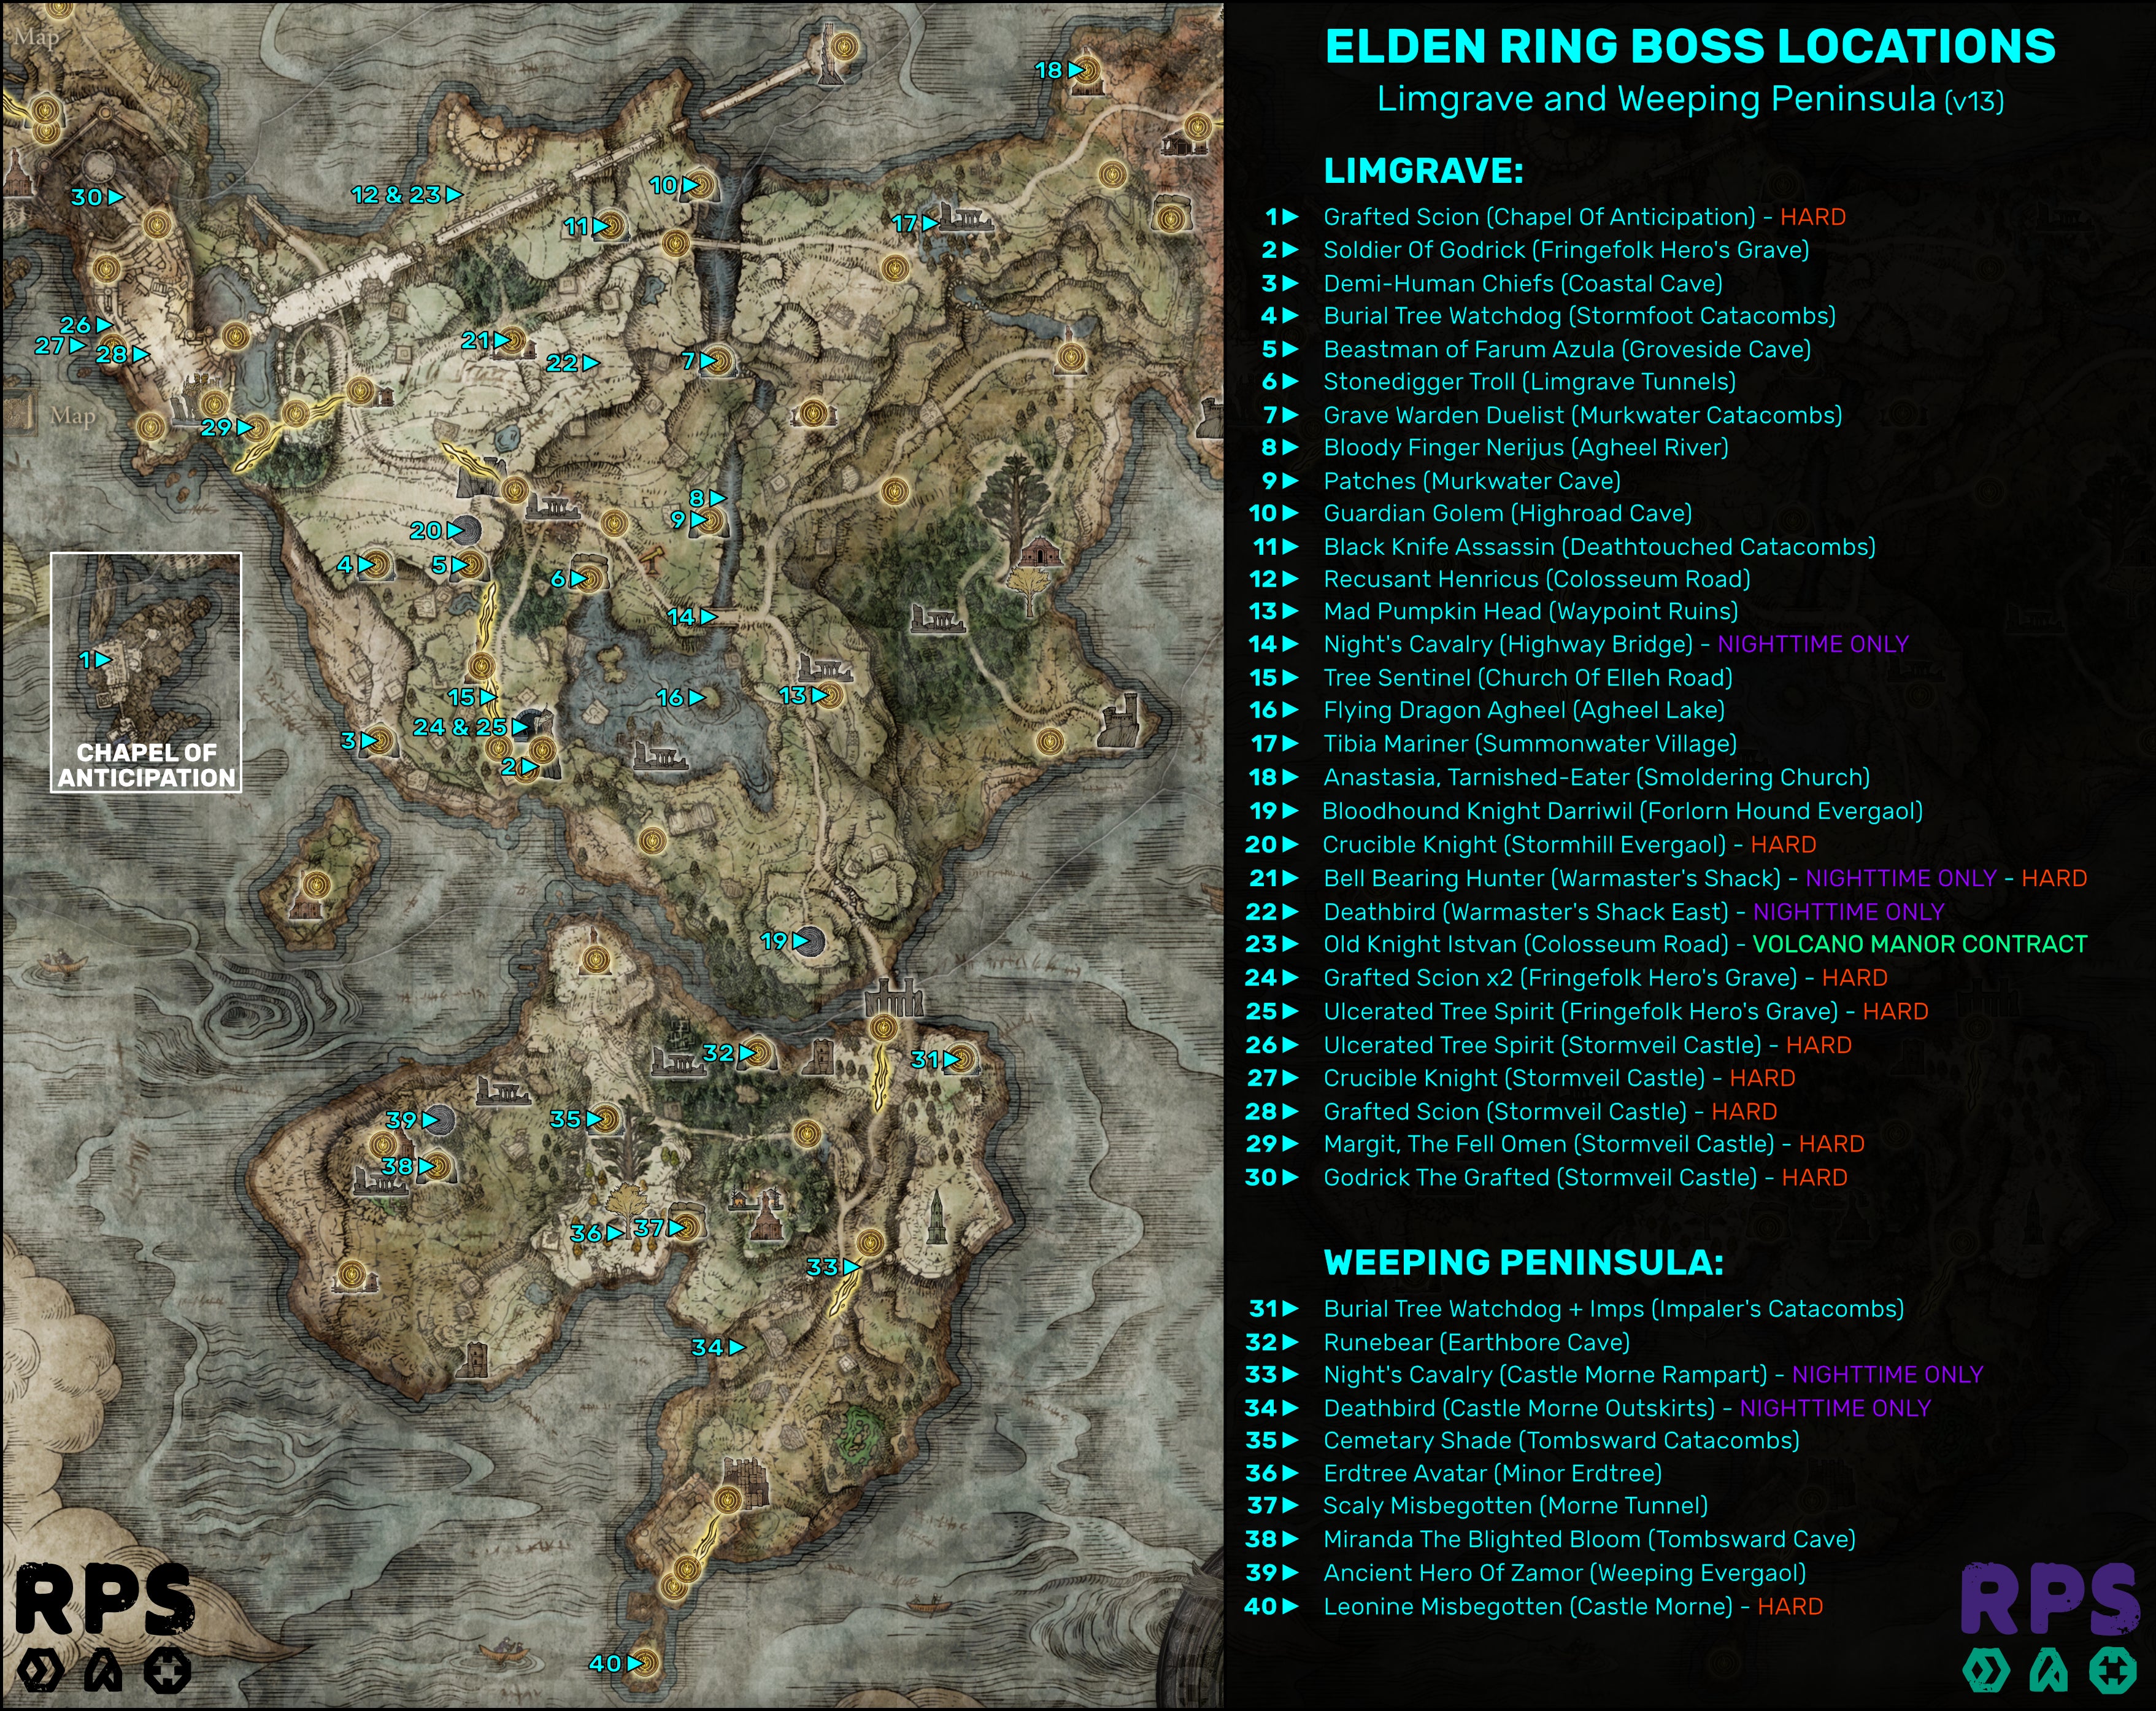 Elden Ring boss locations and ideal boss order   Rock Paper Shotgun